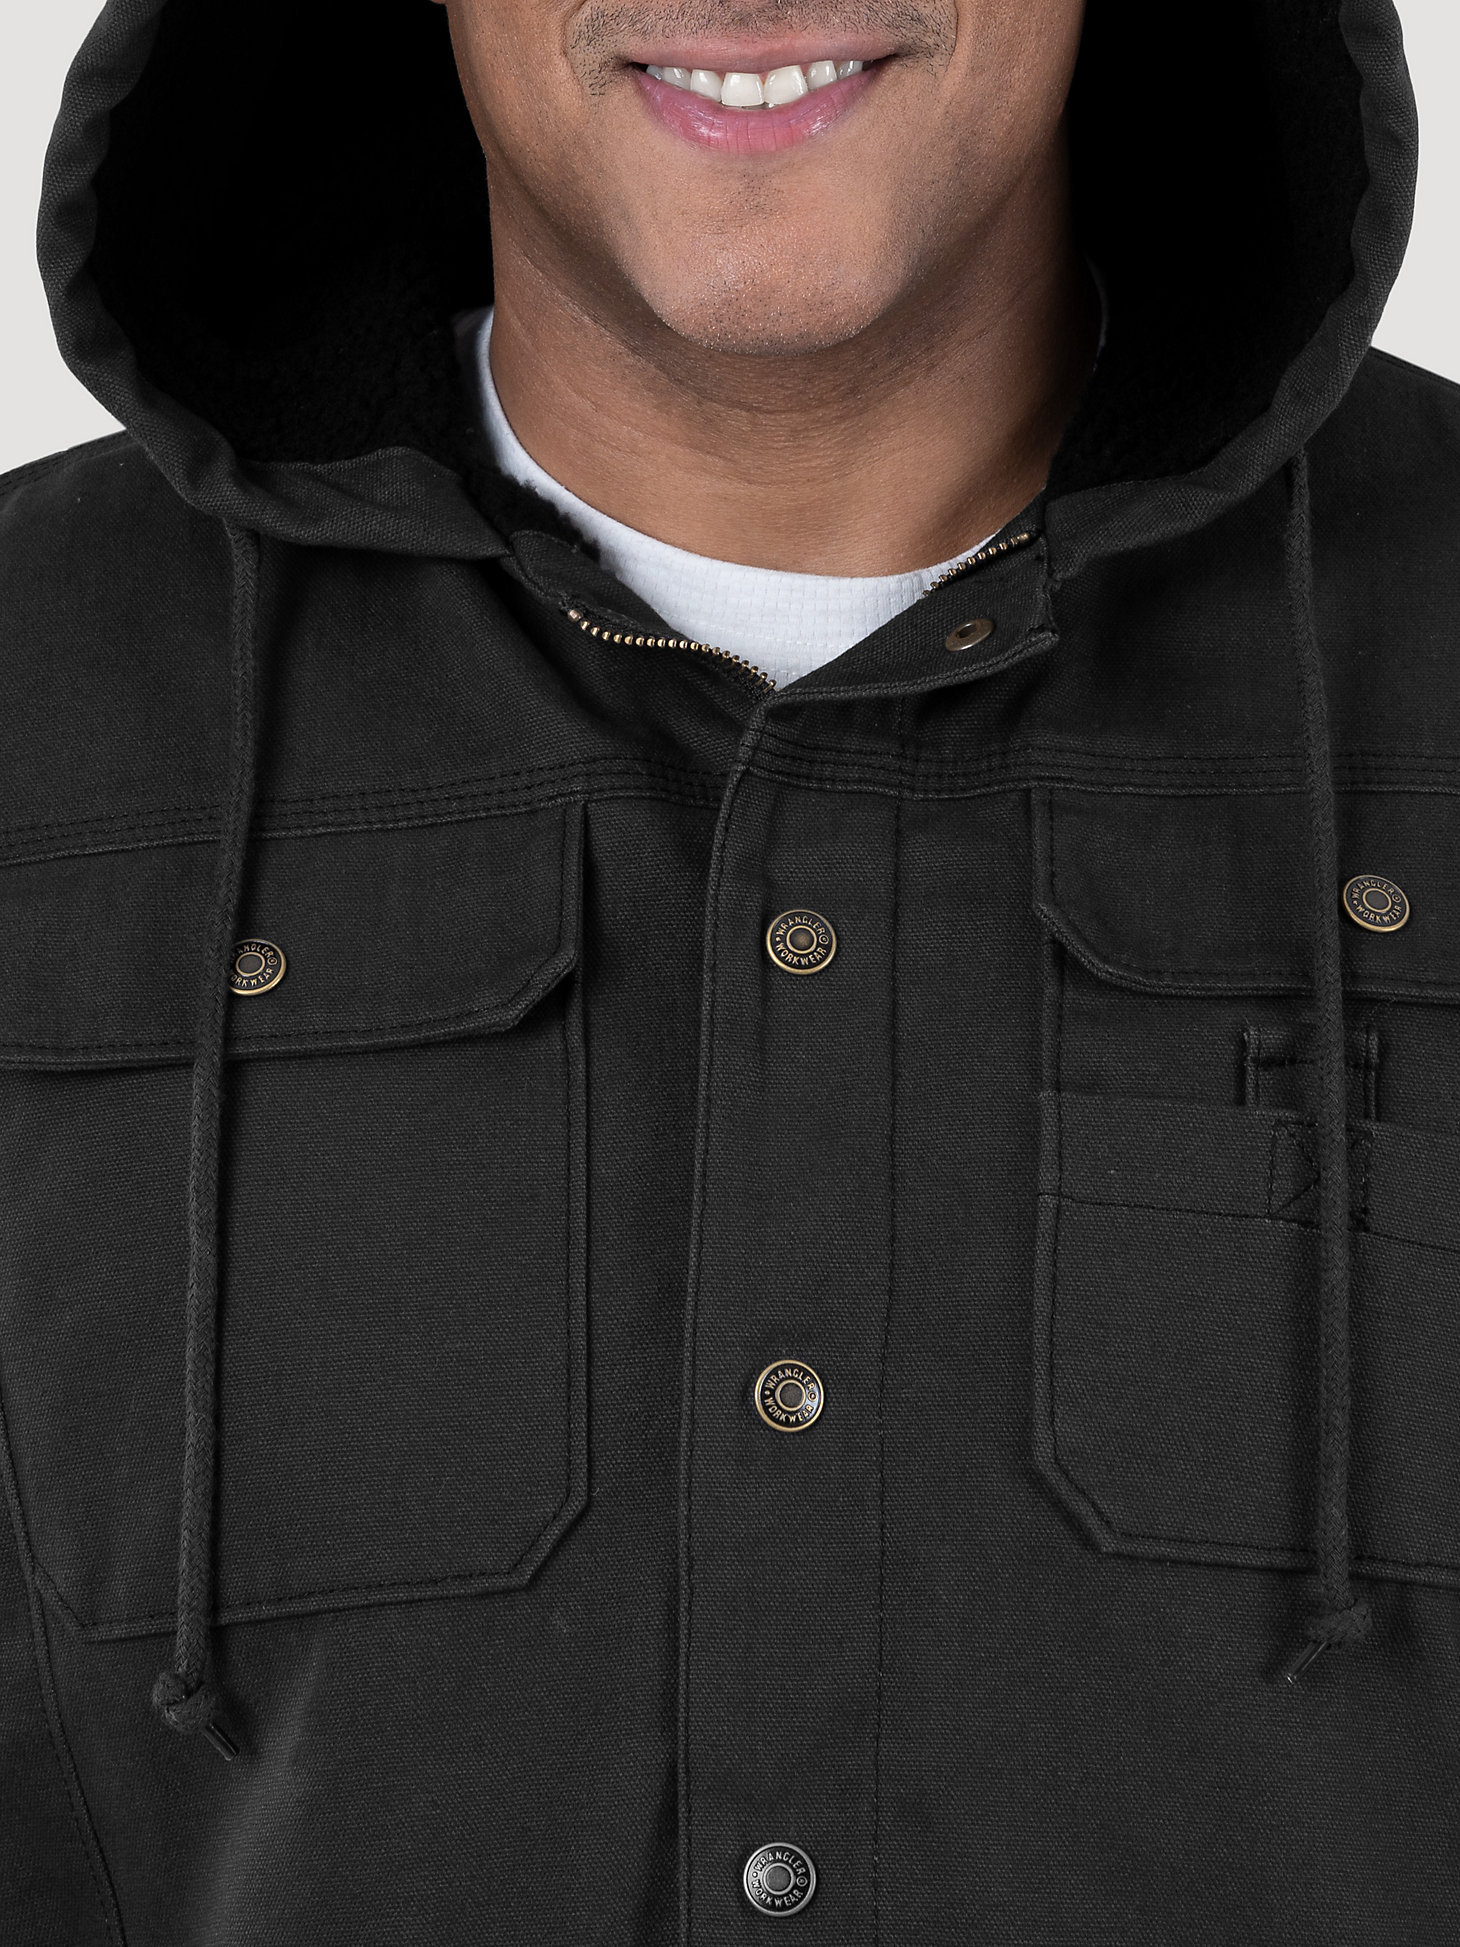 Wrangler® Workwear Sherpa Lined Shirt Jacket in Black alternative view 4